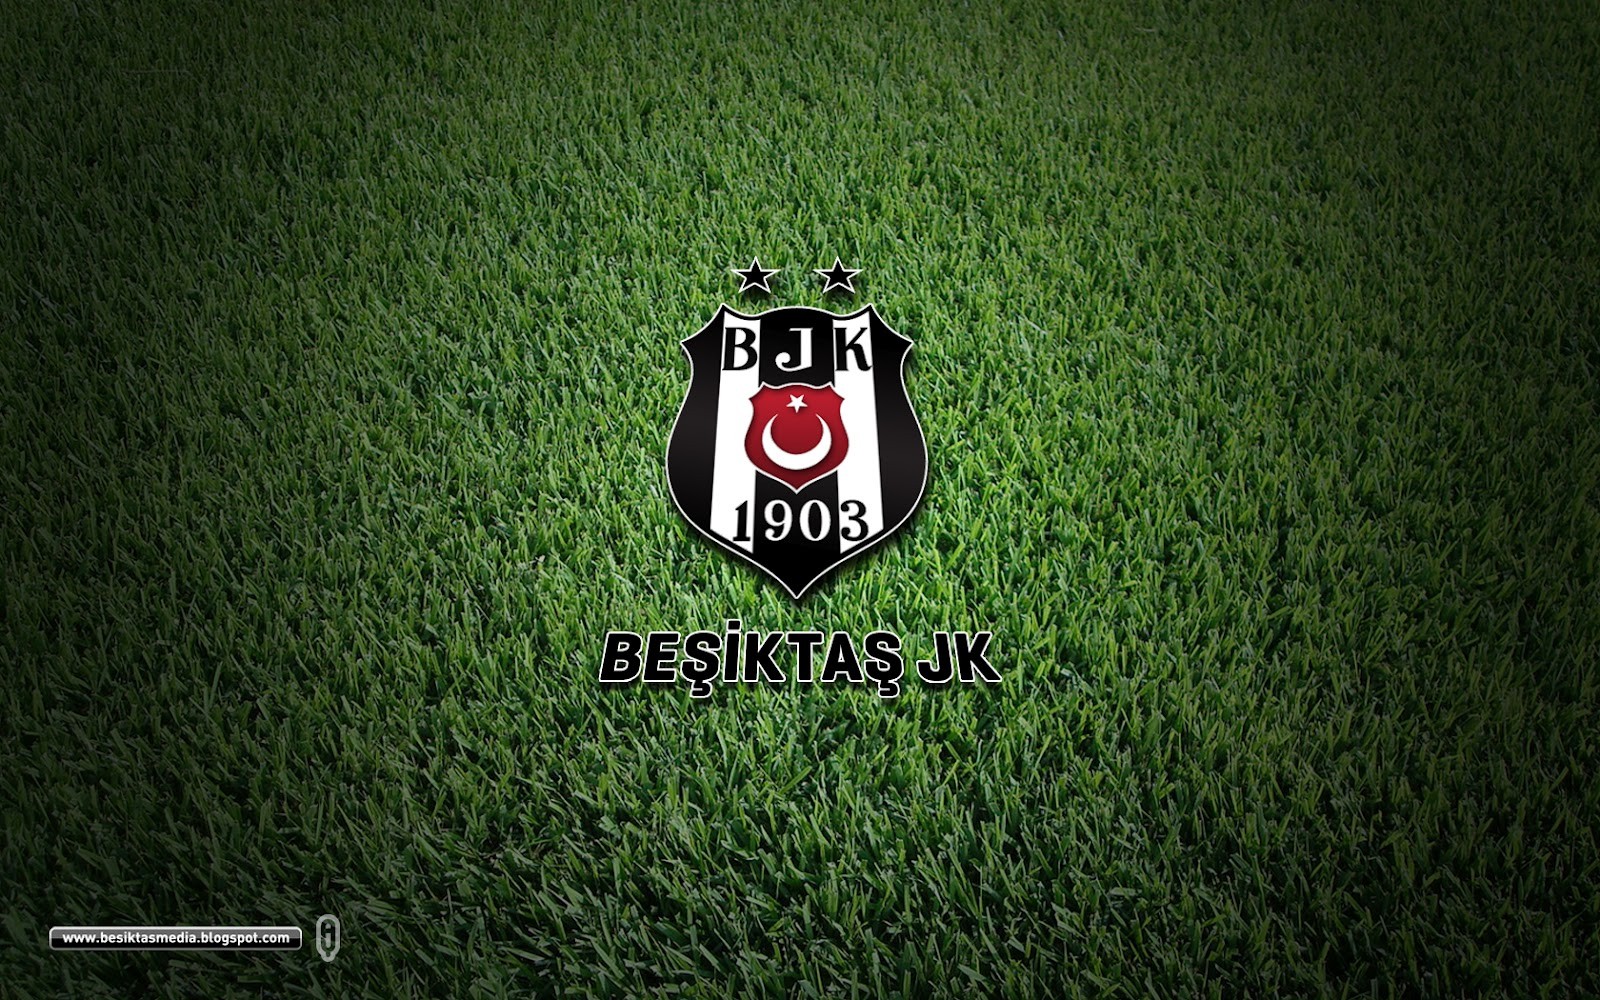 General 1600x1000 Besiktas J.K. Turkey soccer pitches sport logo 1903 (year) soccer clubs